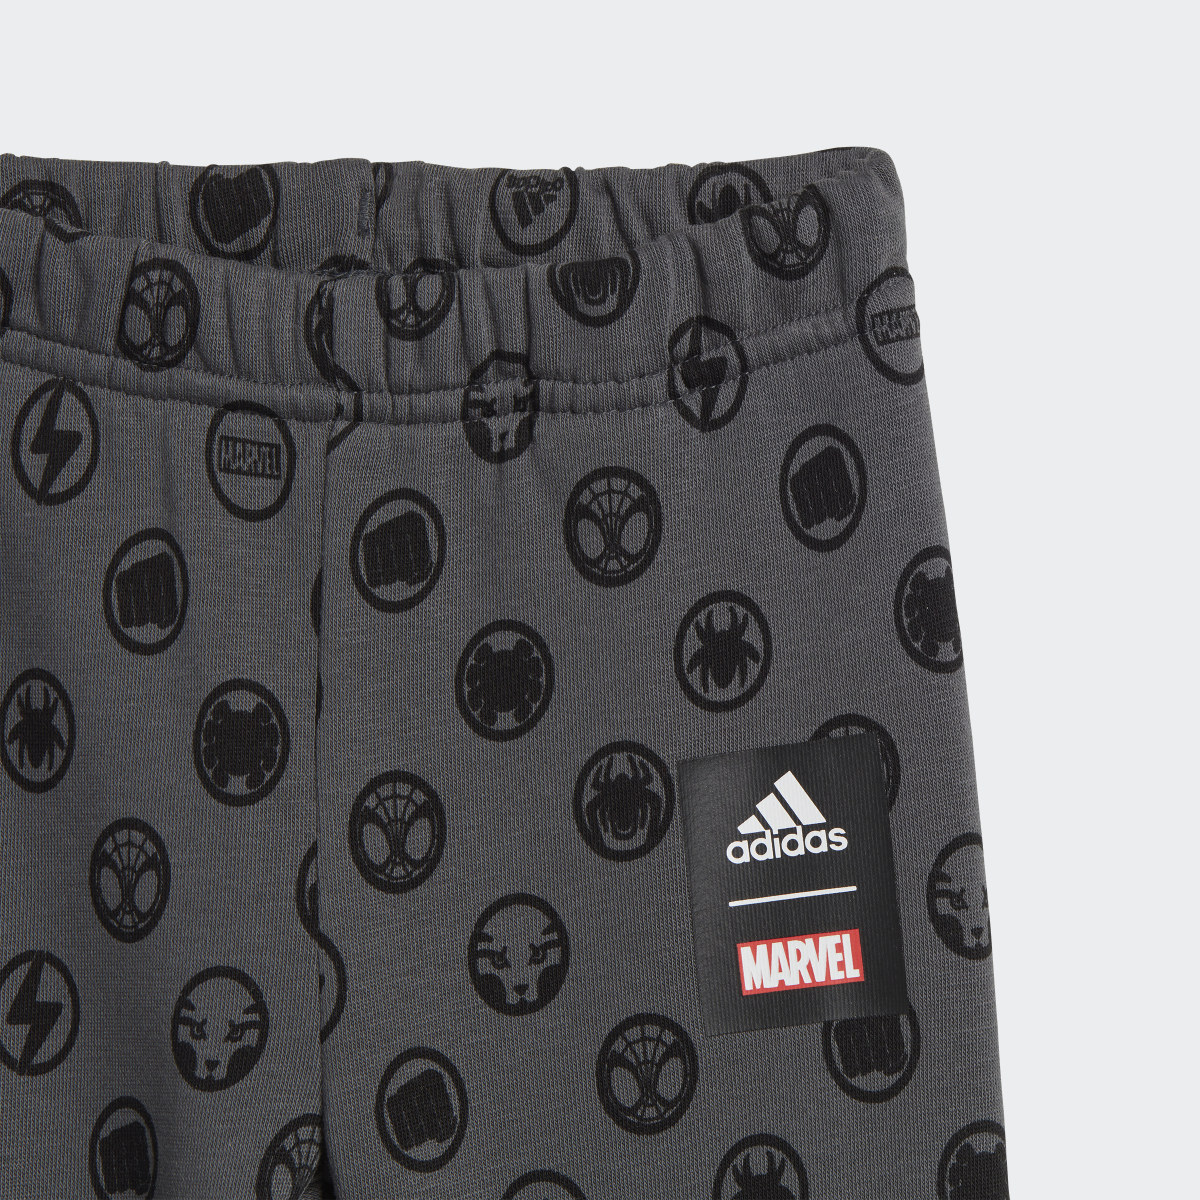 Adidas Conjunto Spider-Man adidas x Marvel. 9